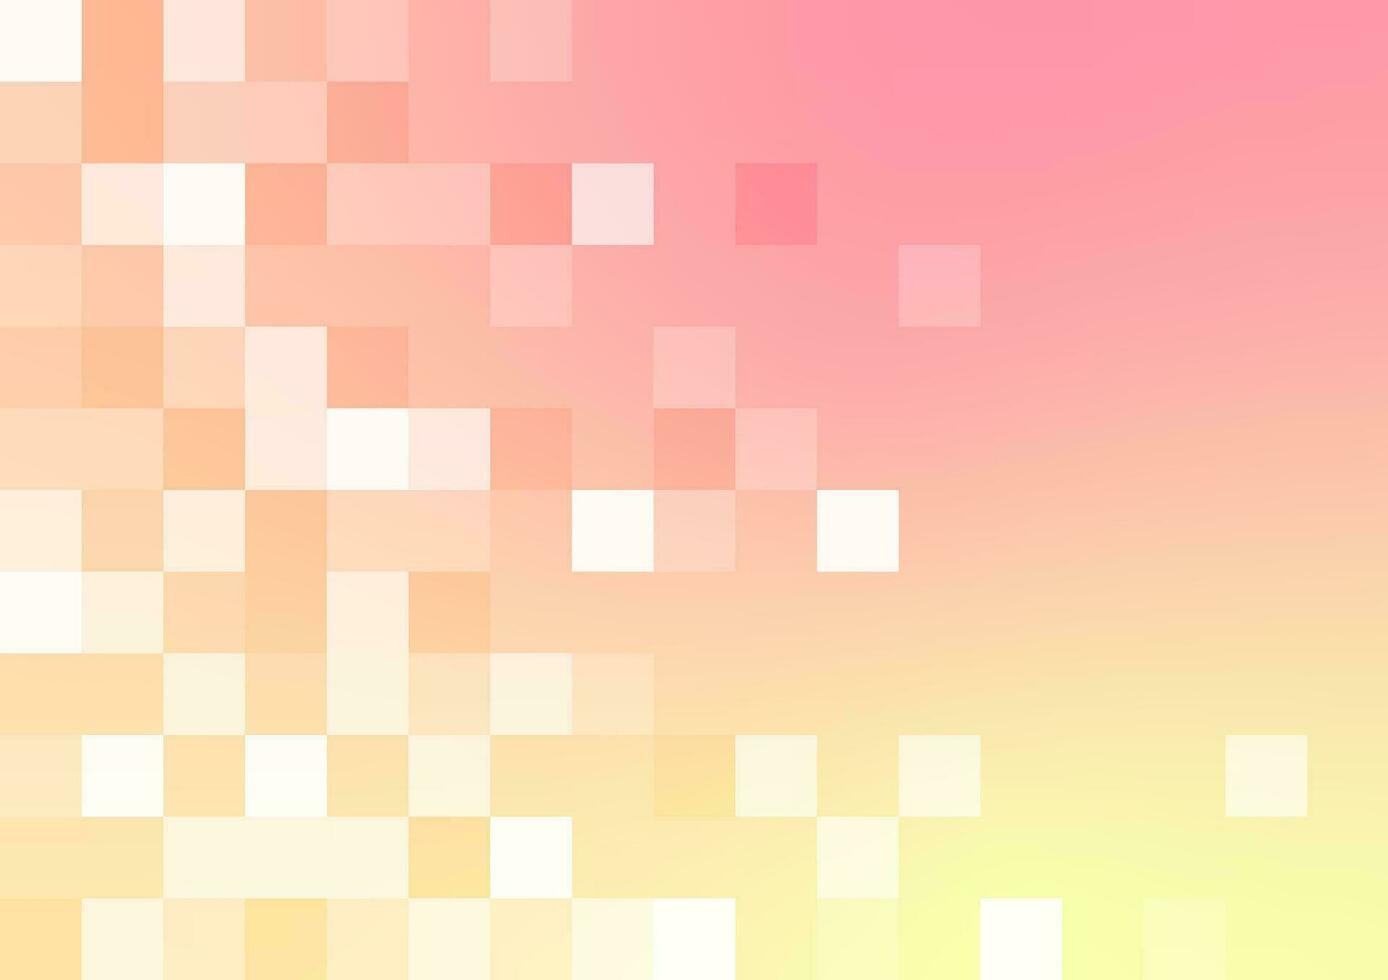 plein patroon vervagen geel roze helling banier Hoes achtergrond vector